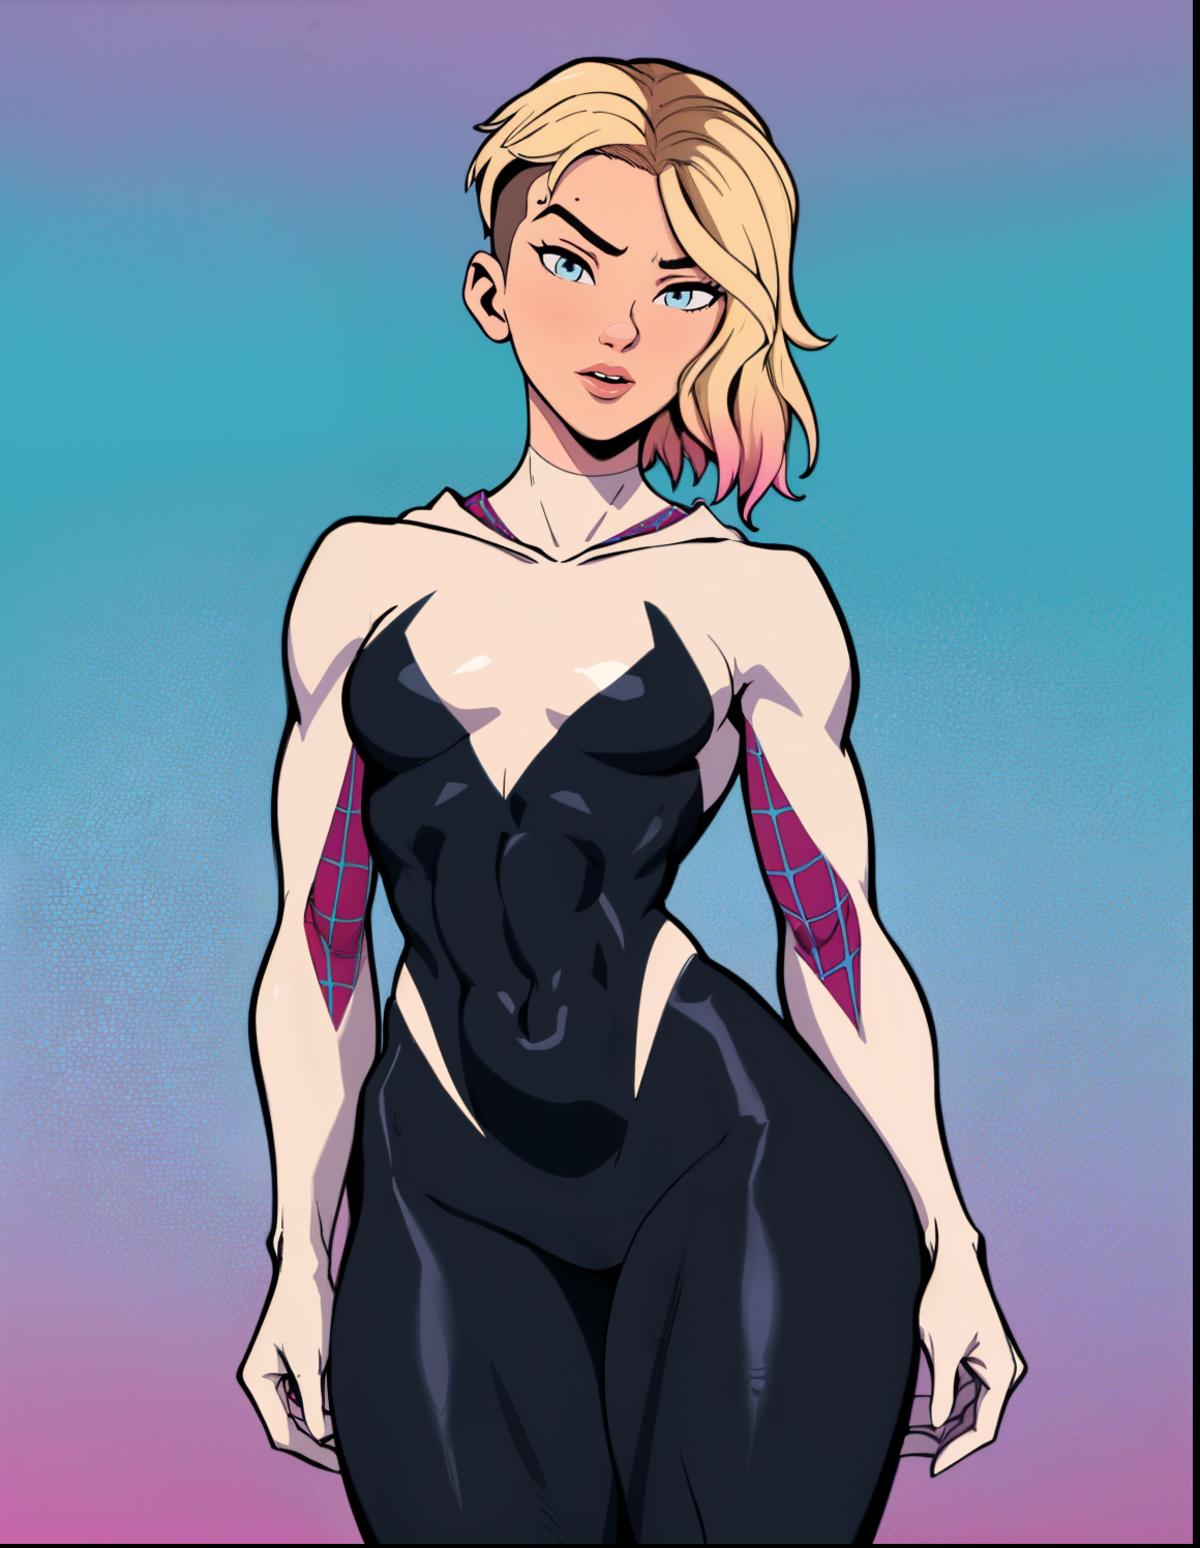 Gwen Stacy - Spider-Verse image by buntar2016698